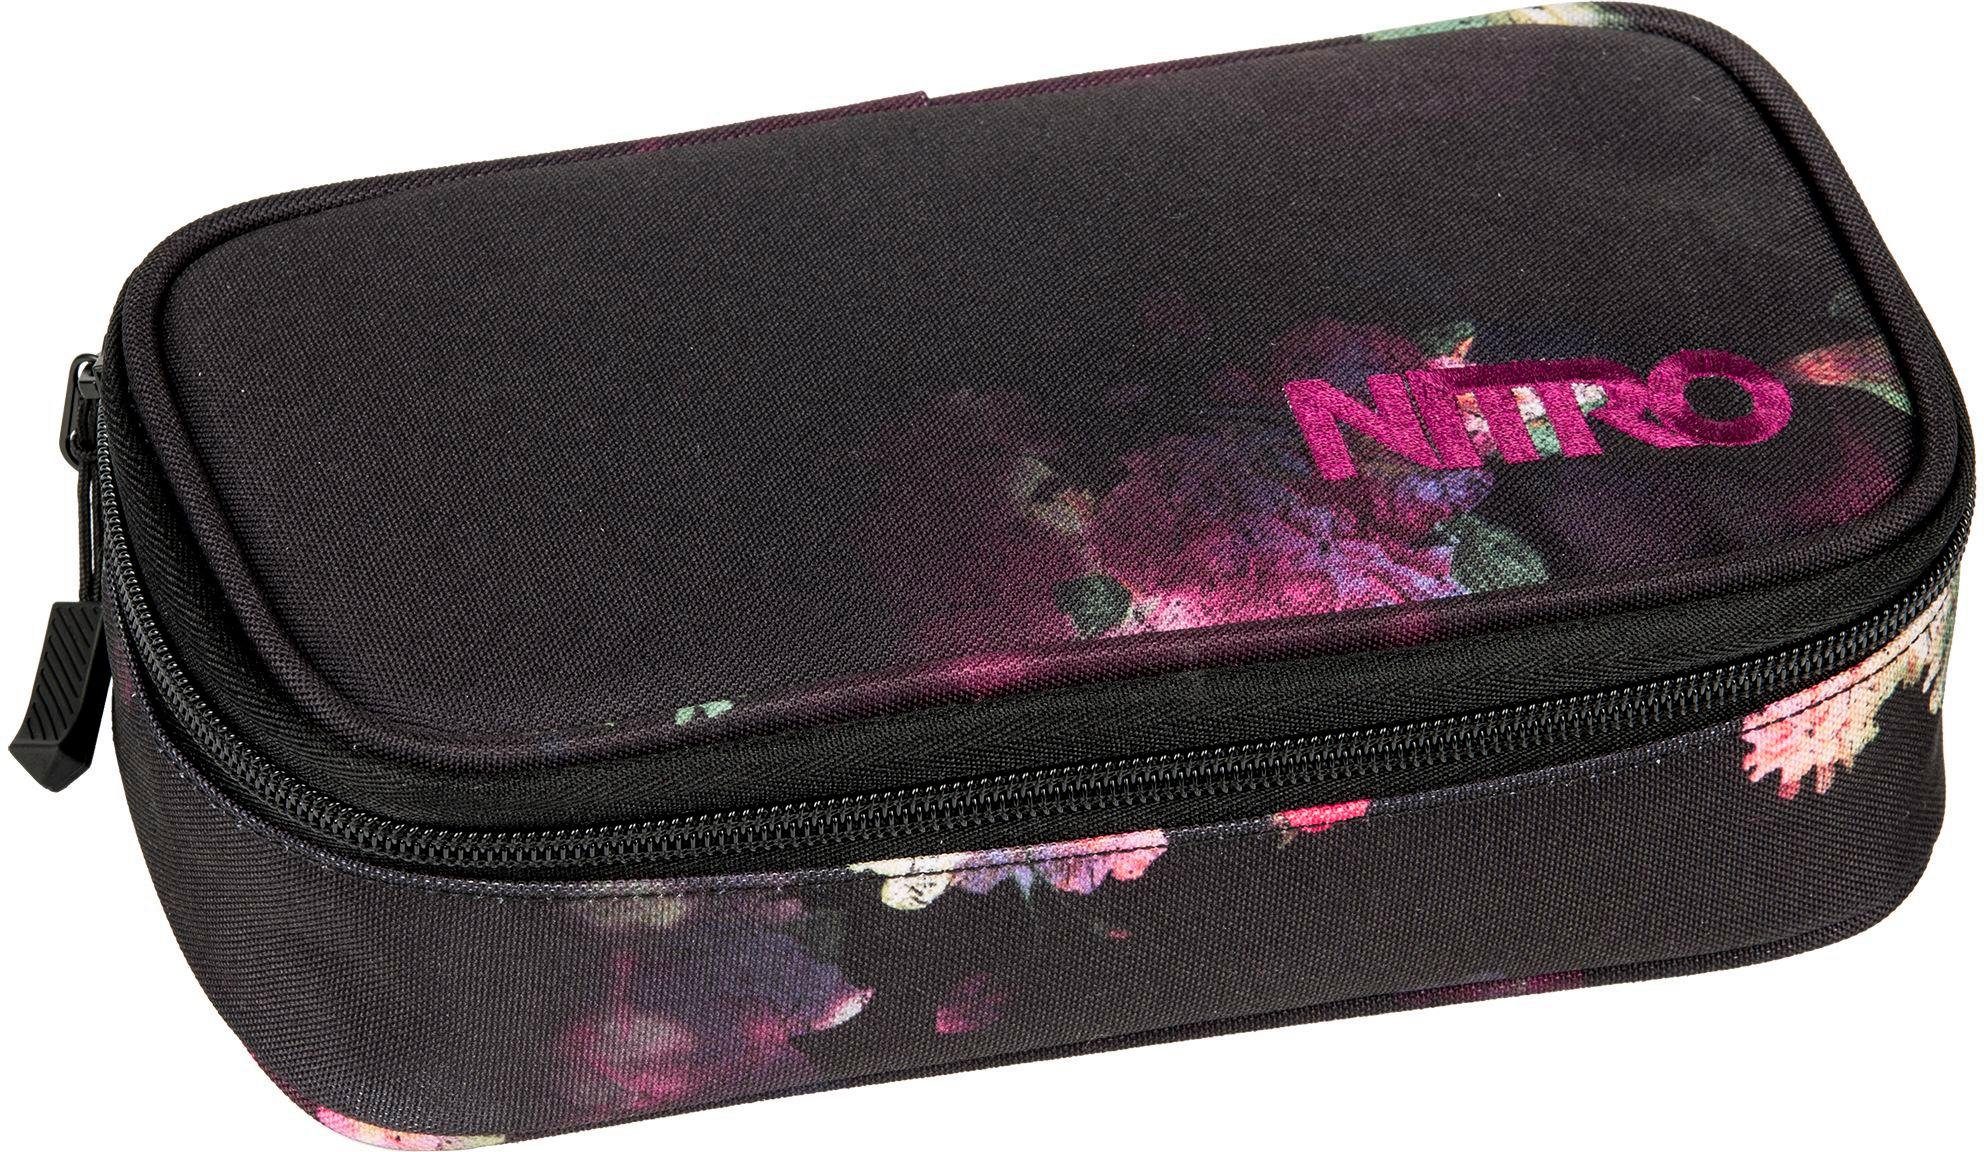 Pencil NITRO XL, Black Federtasche Rose Case